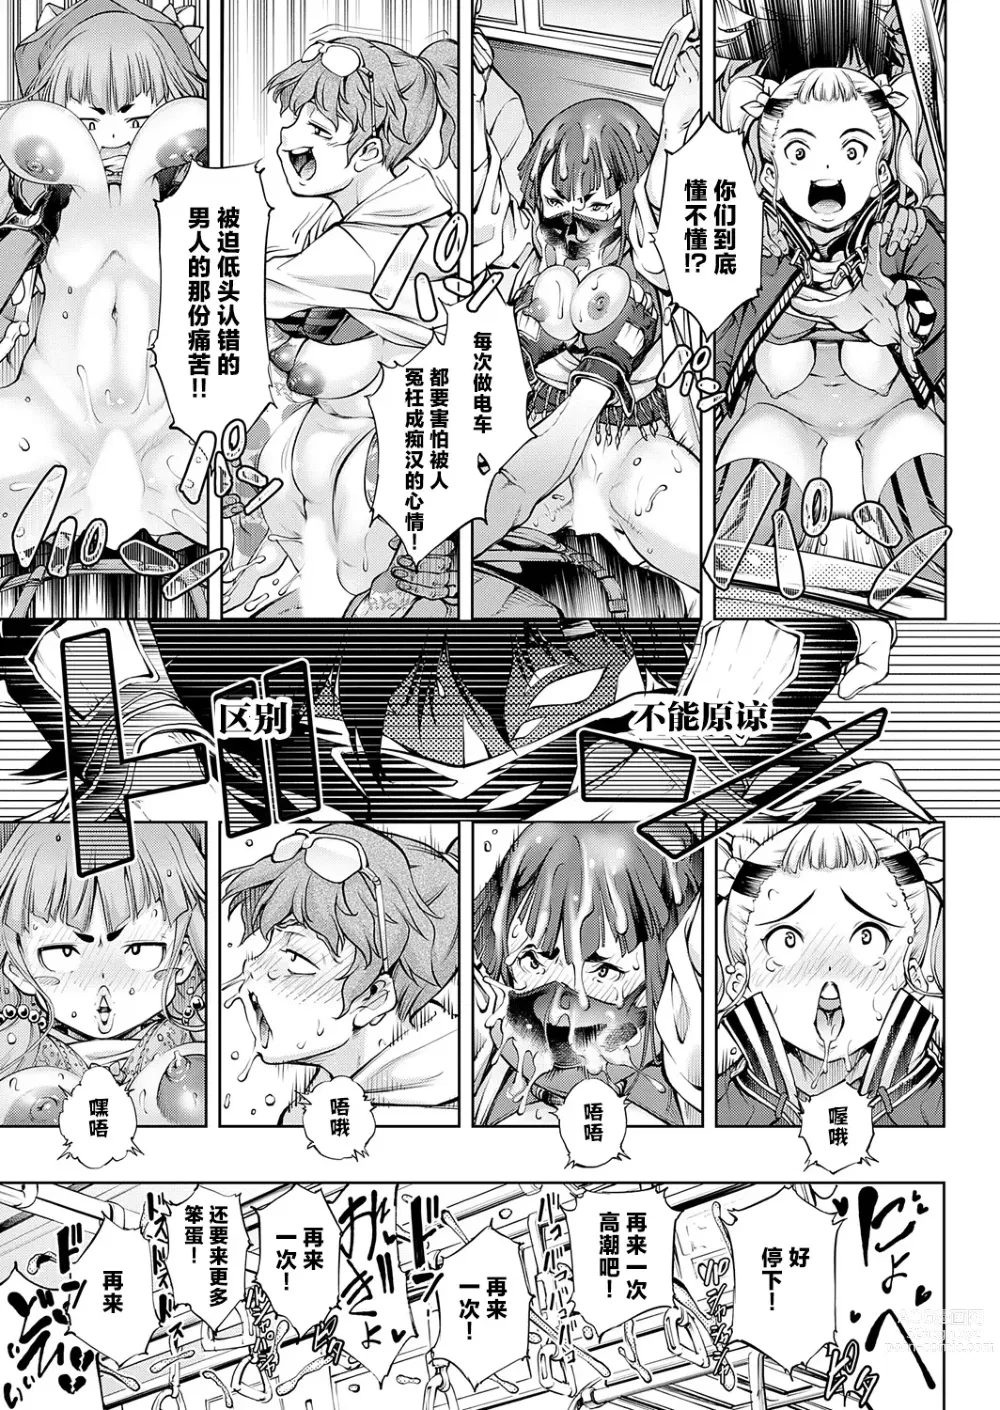 Page 11 of manga The Time ~Ore Monogatari~